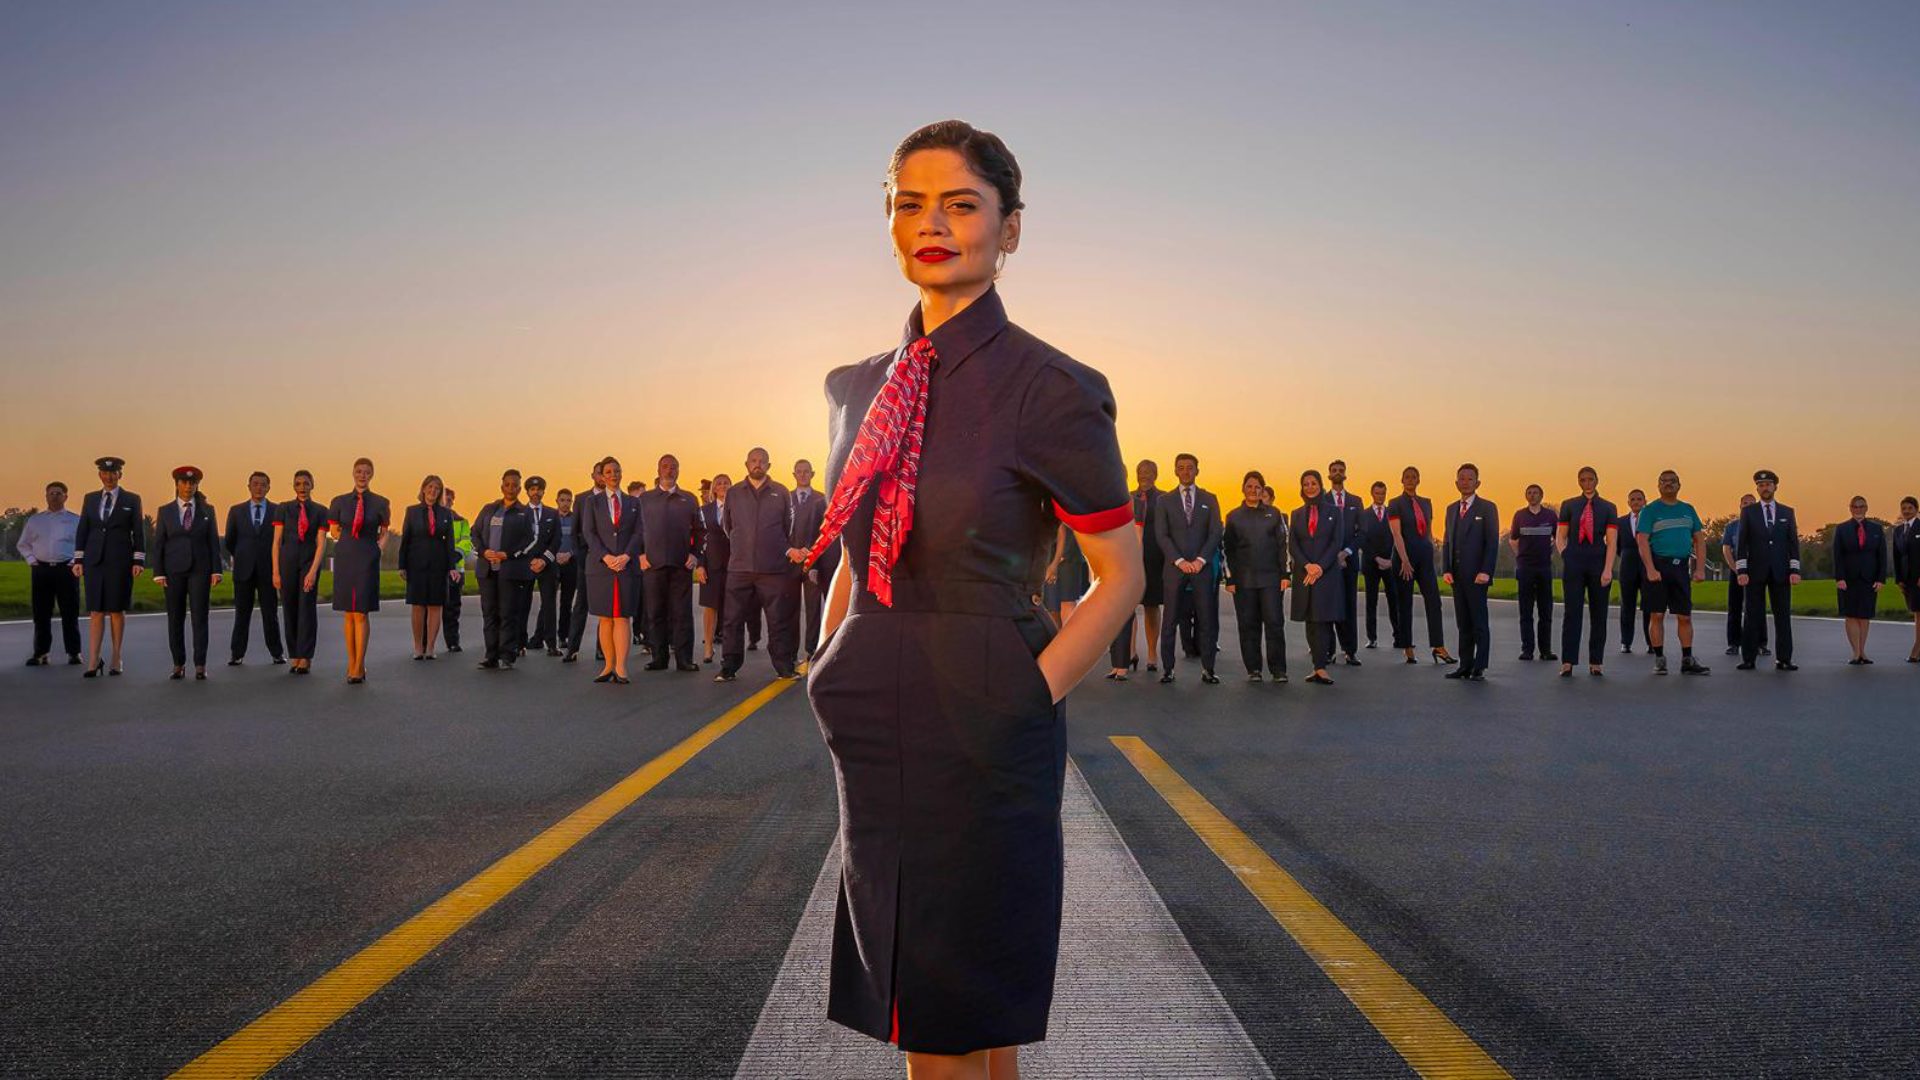 British Airways updates staff uniforms for first time in two decades